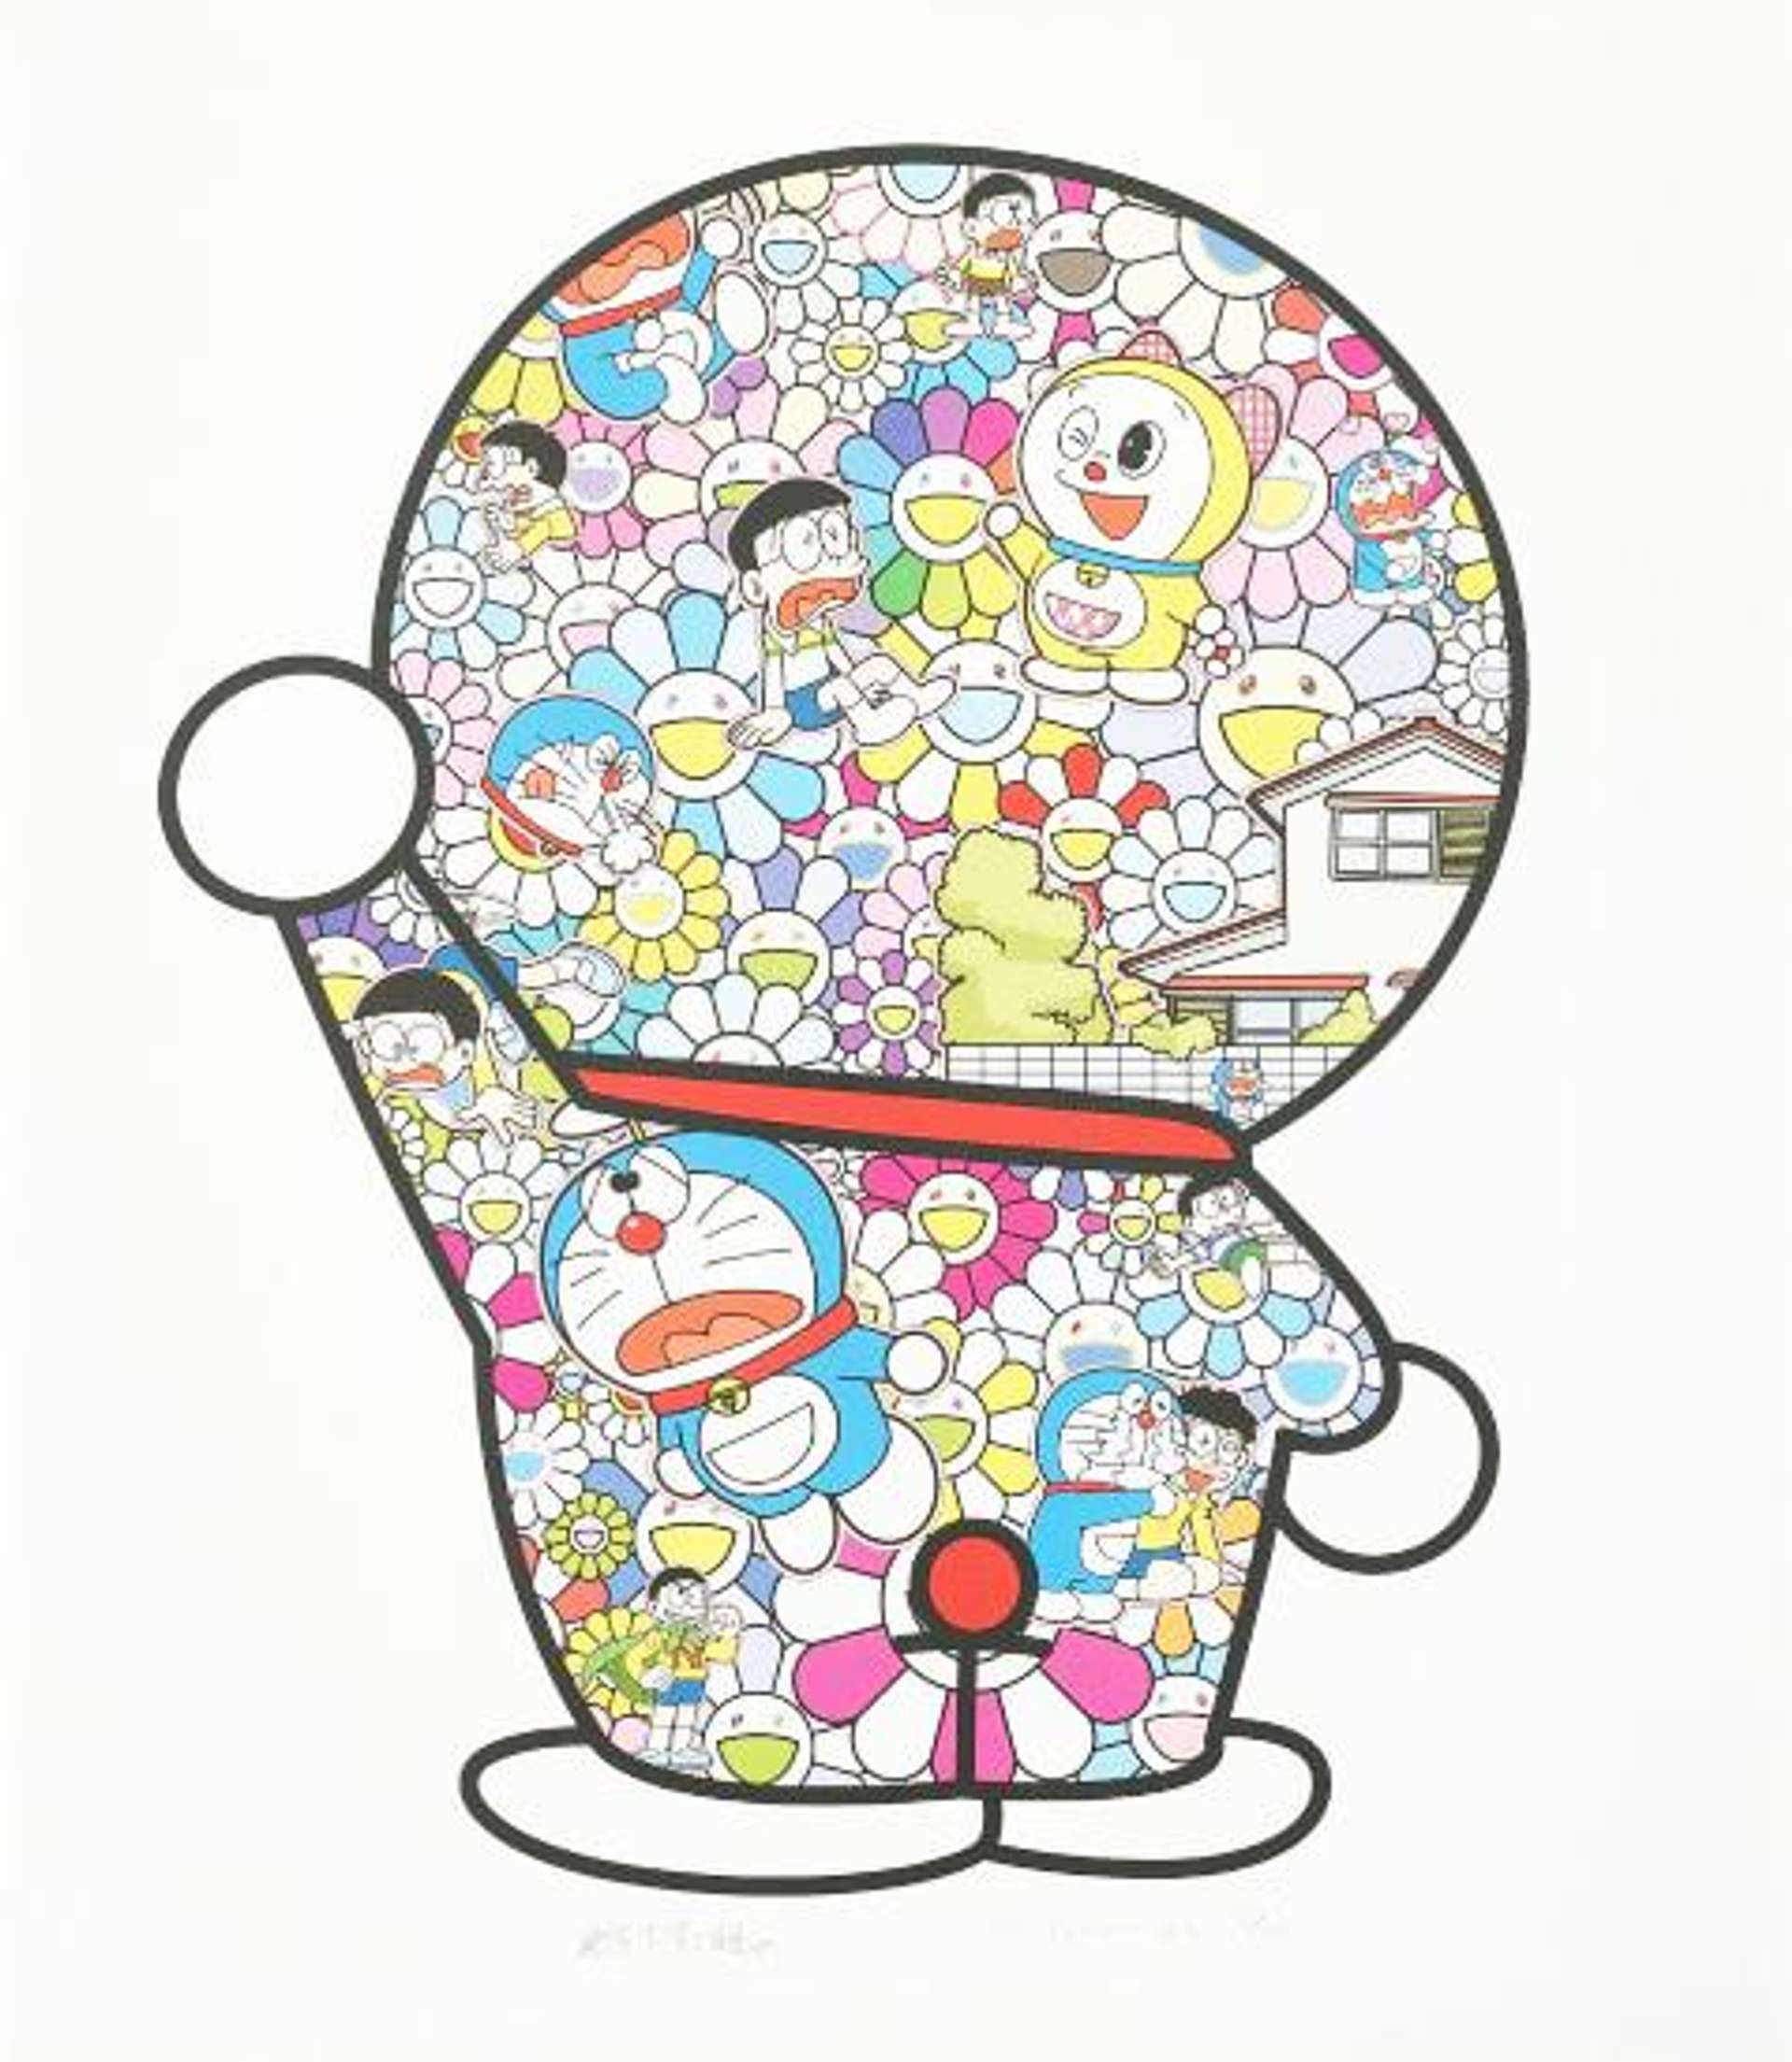 Doraemon In The Field Of Flowers - Signed Print by Takashi Murakami 2019 - MyArtBroker